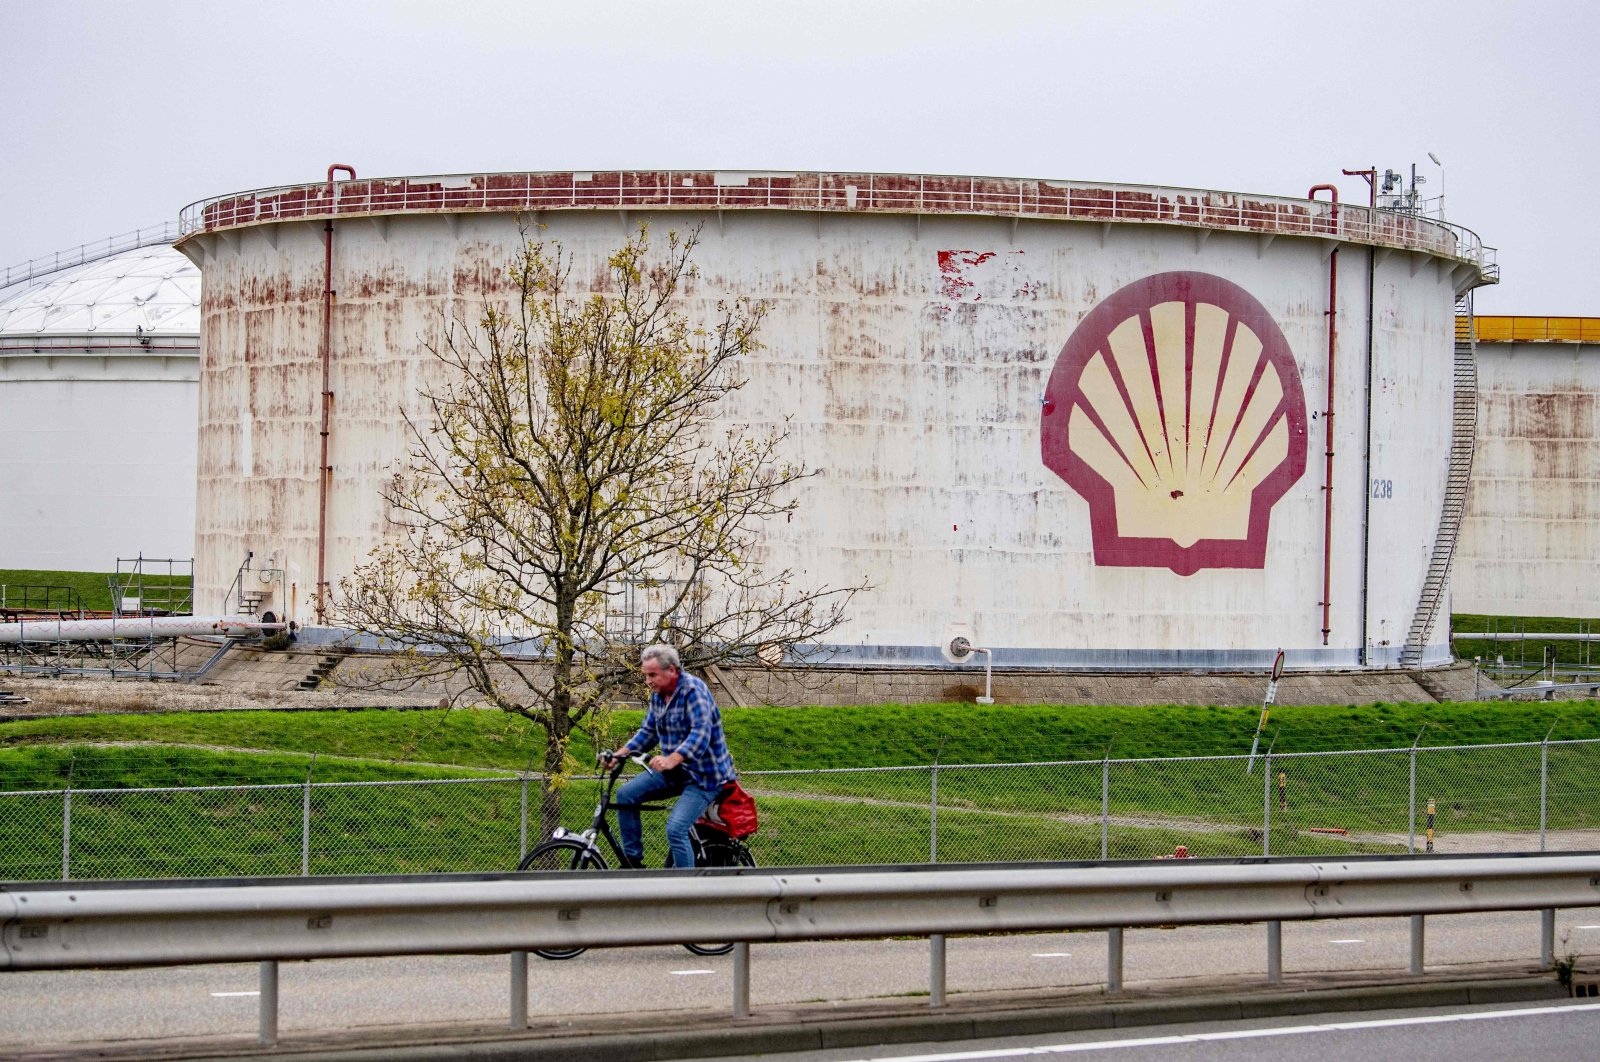 Shell melepaskan ‘Royal Dutch,’ mengumumkan perpindahan markas besar ke Inggris